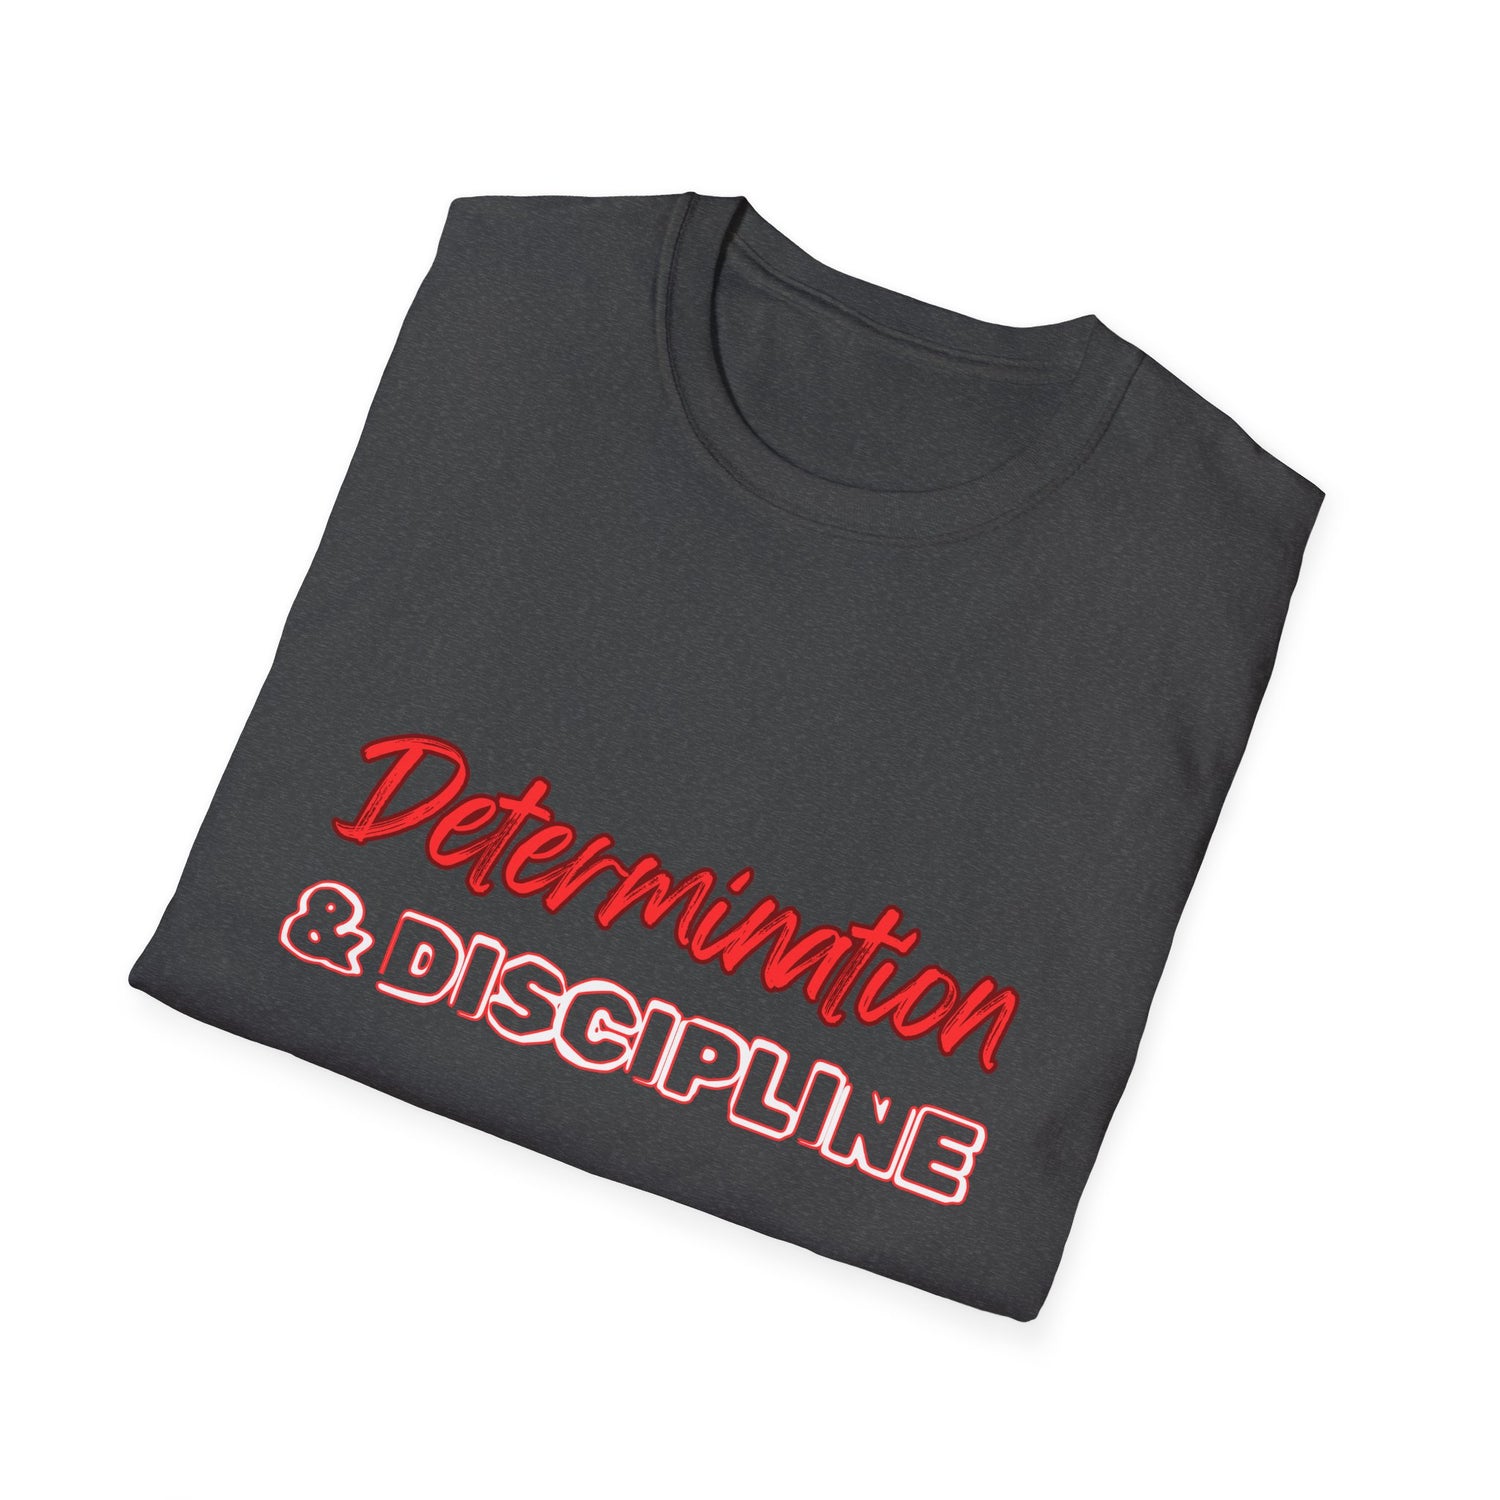 Determination & Discipline - Unisex Softstyle T-Shirt